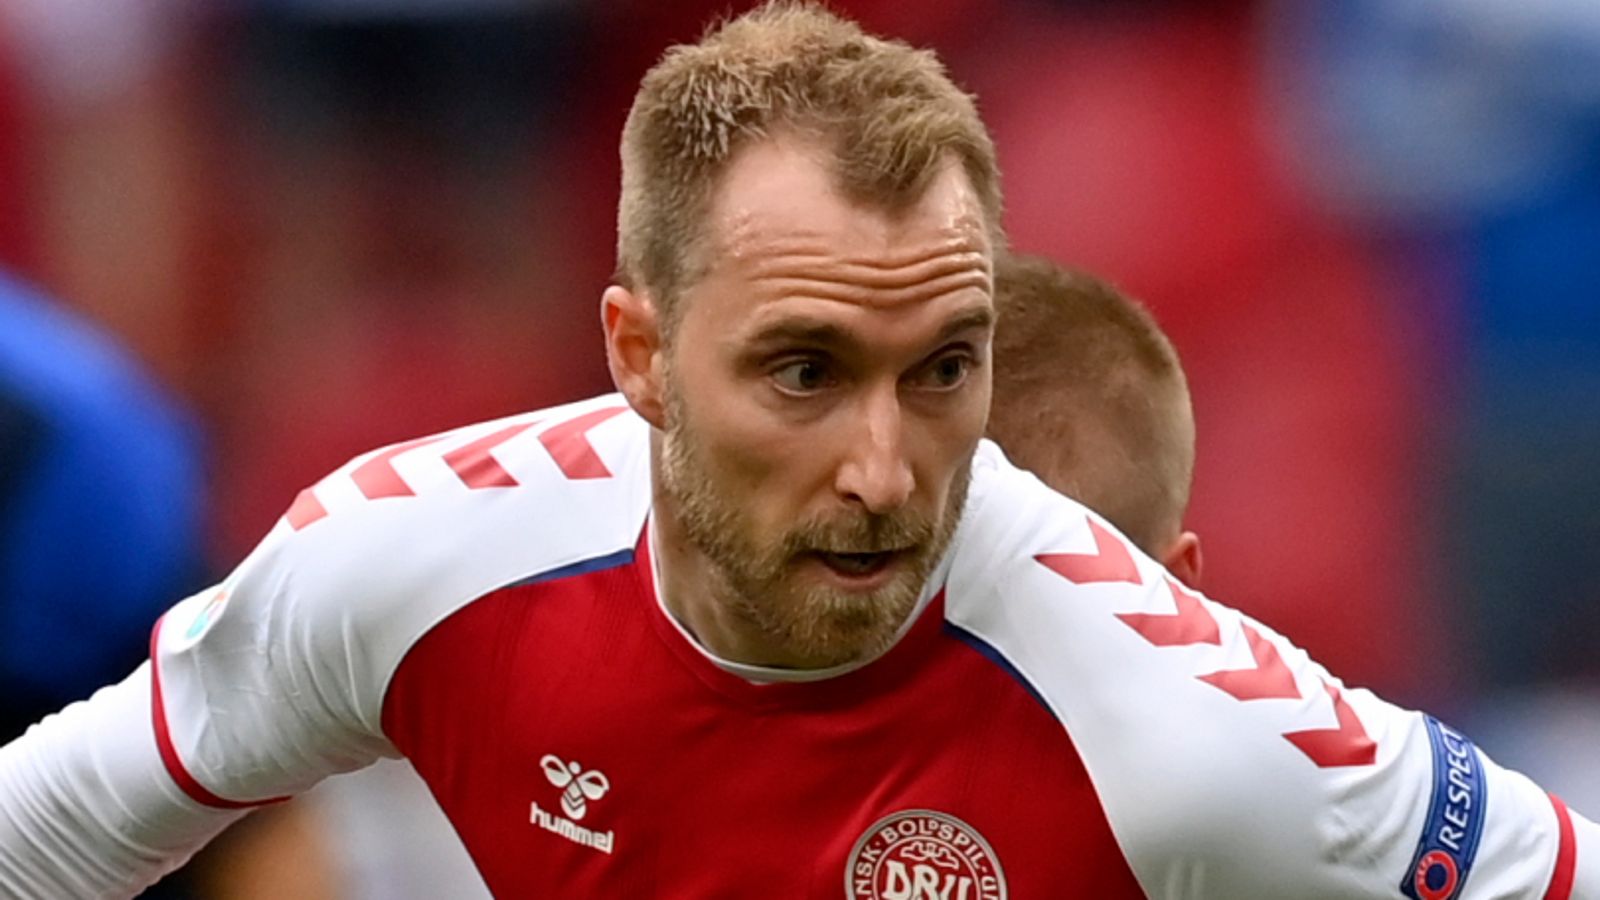 Christian Eriksen: Denmark midfielder discharged from hospital after successful operation | Football News